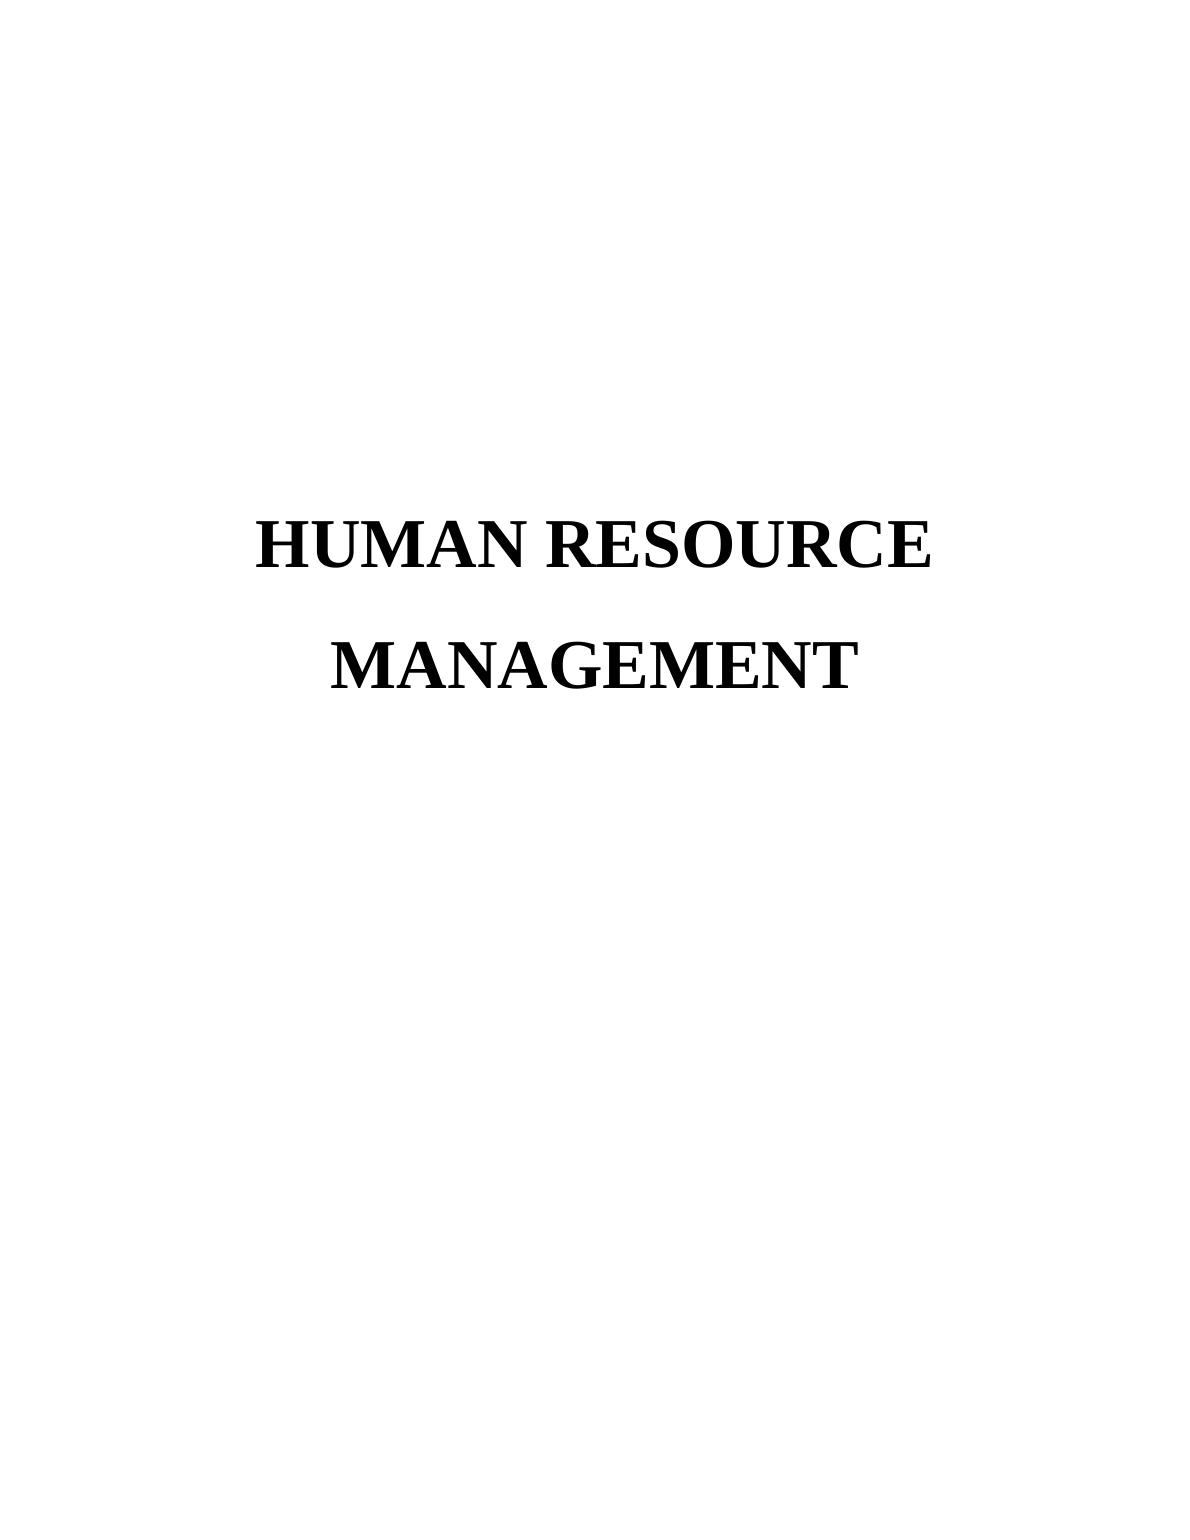 Human Resource Management Report of Mark & Spencer_1